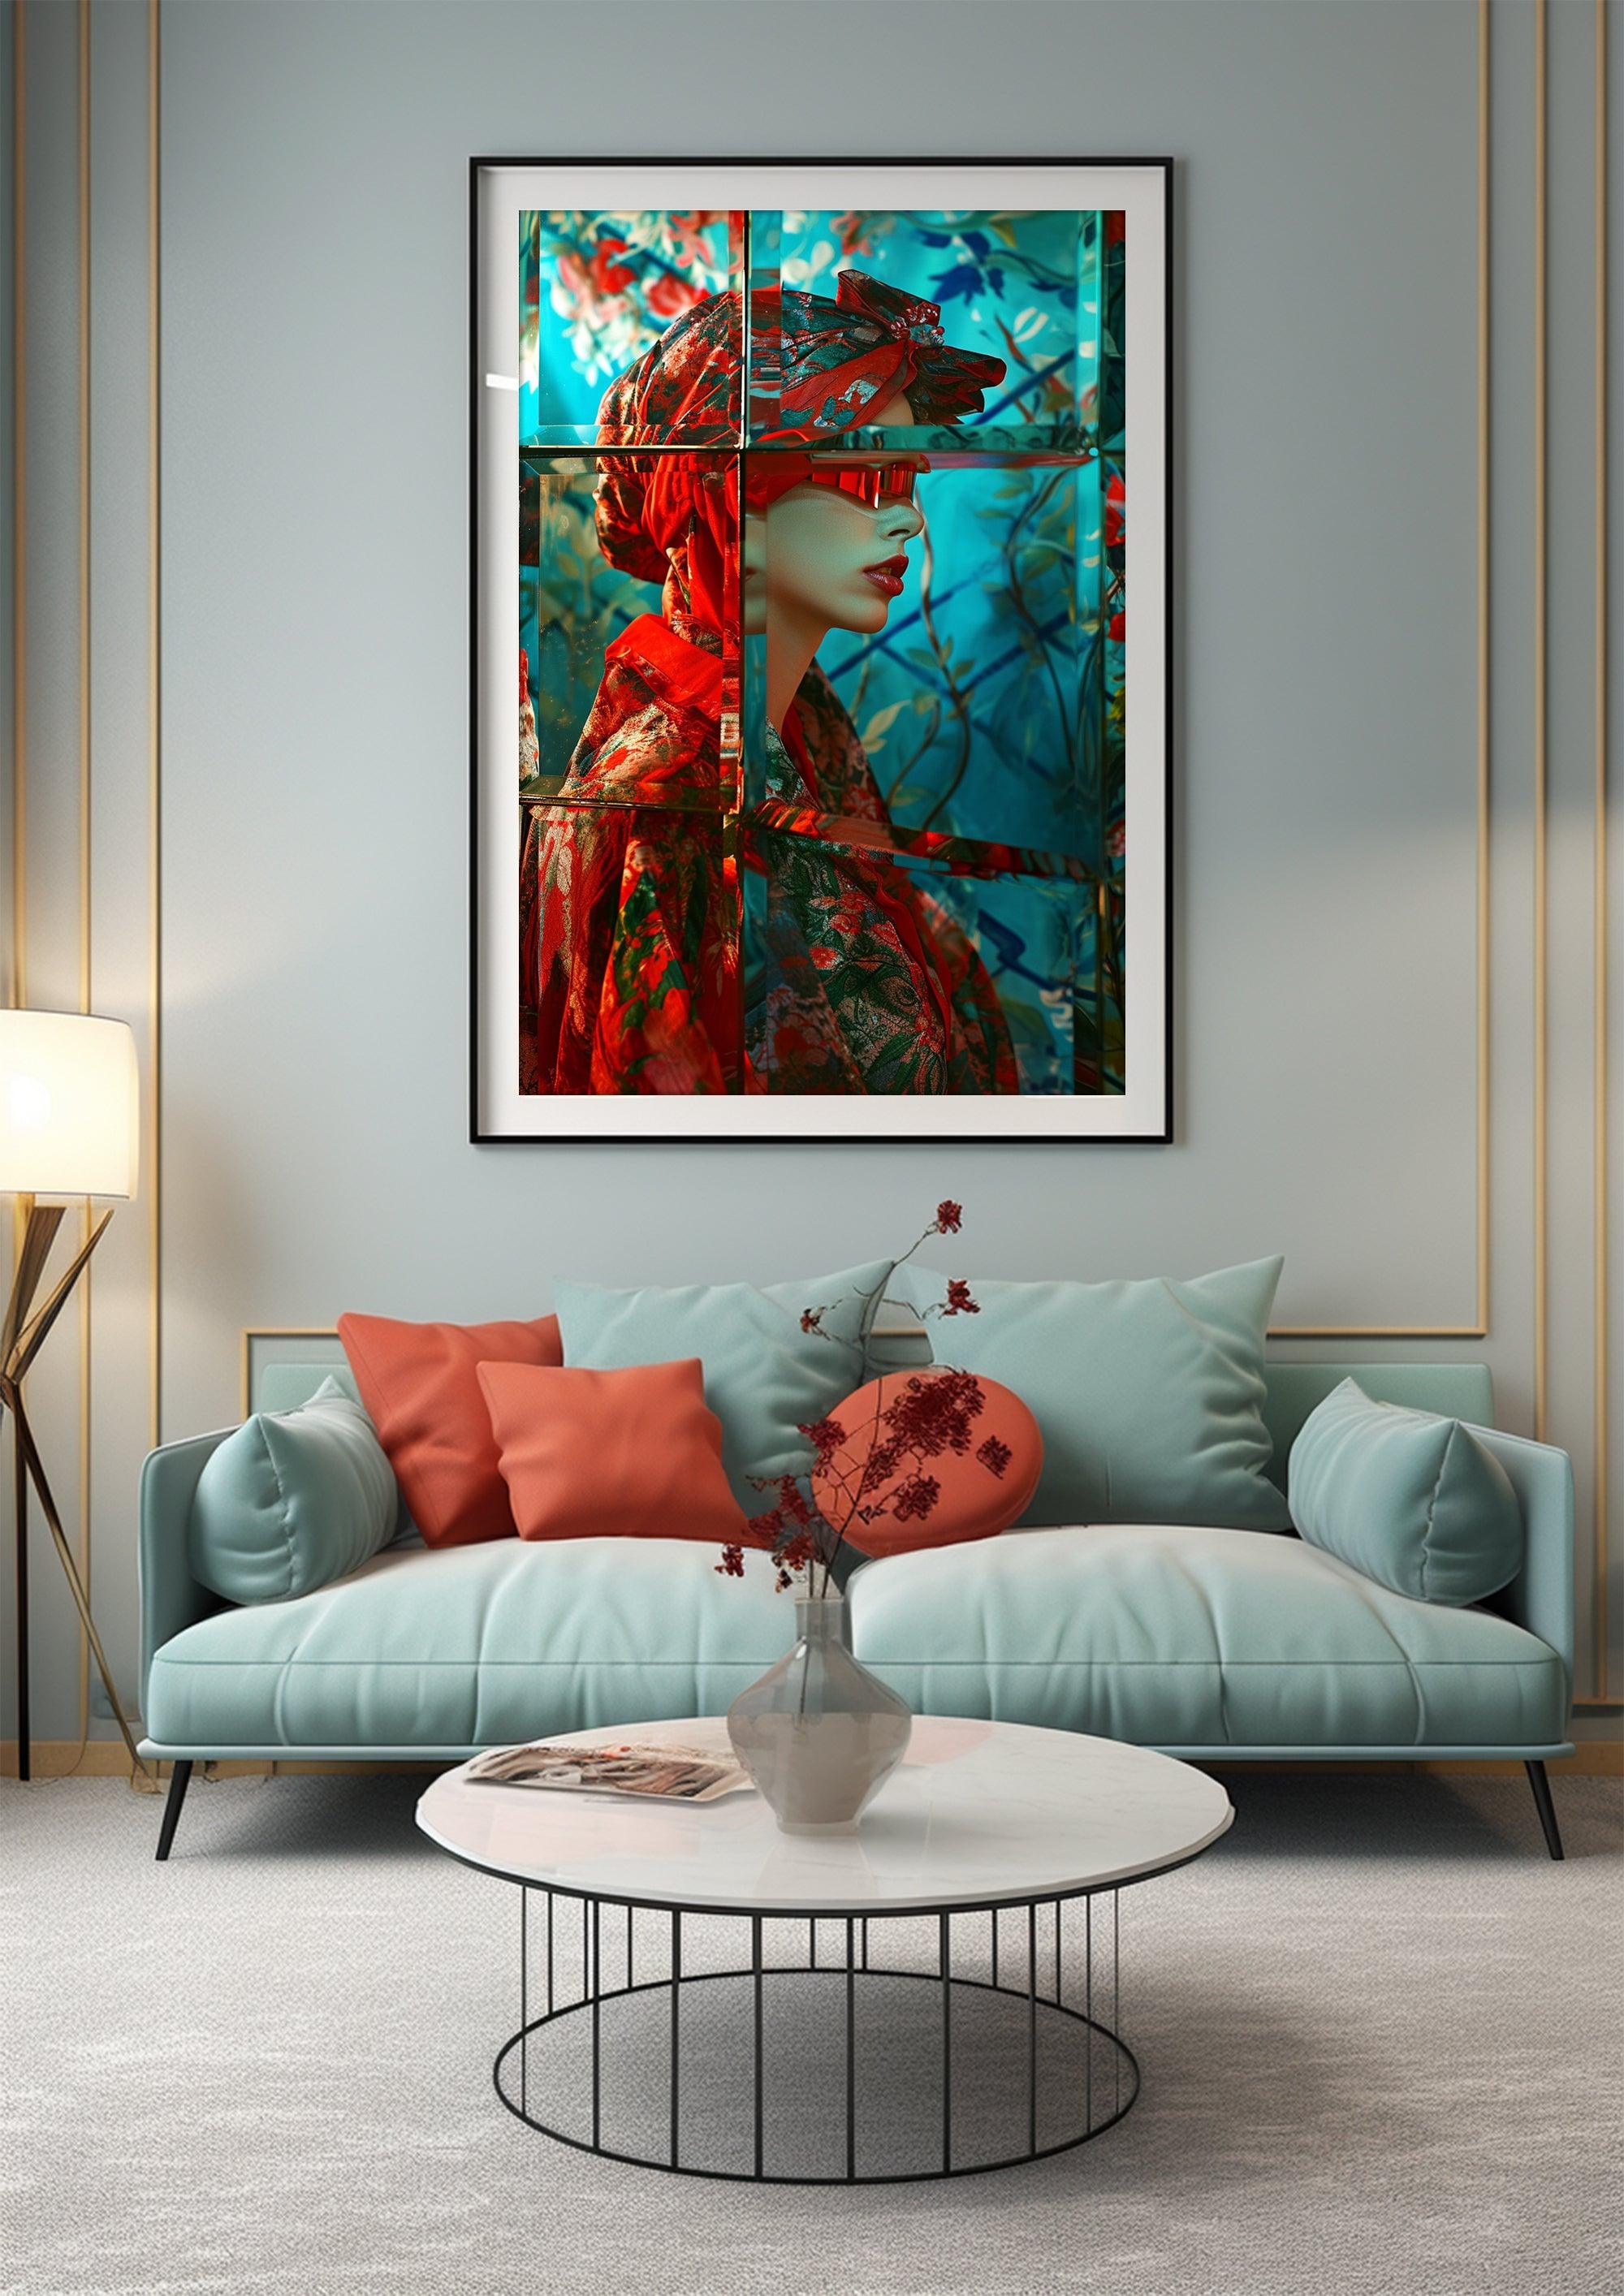 Fashion Poster| Fashion Wall Art Decor |Gallery-quality art prints|Advanced Poster Design|bedroom livingroom,Hotel Decoration|PRINTABLE Art |Digital Download